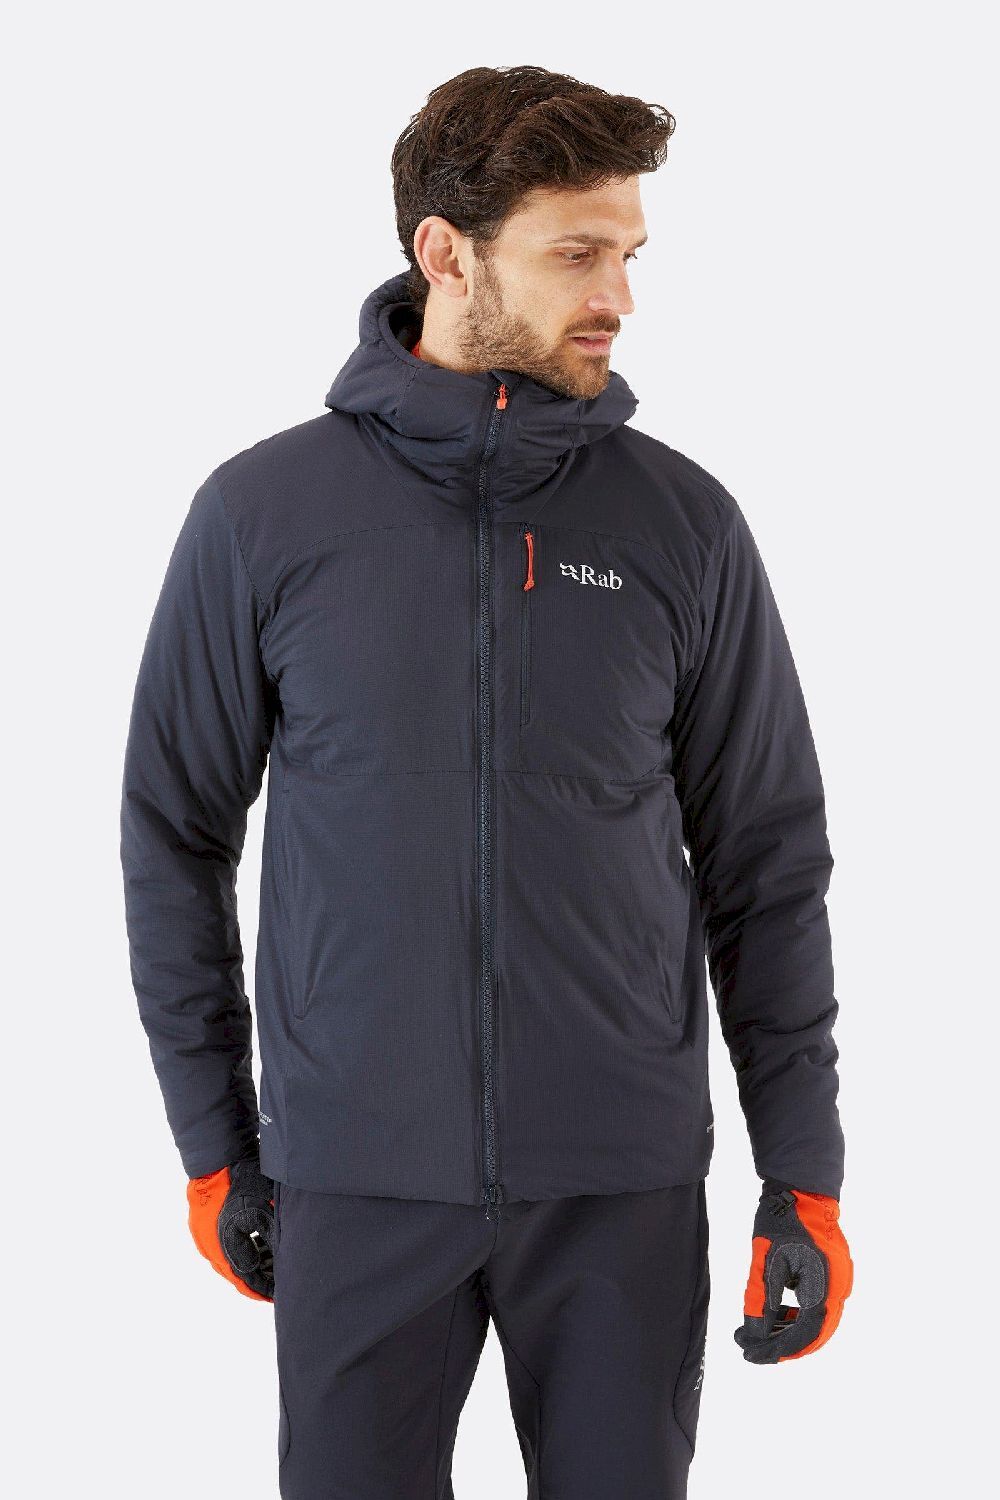 Rab Xenair Alpine Jacket - Chaqueta de esquí - Hombre